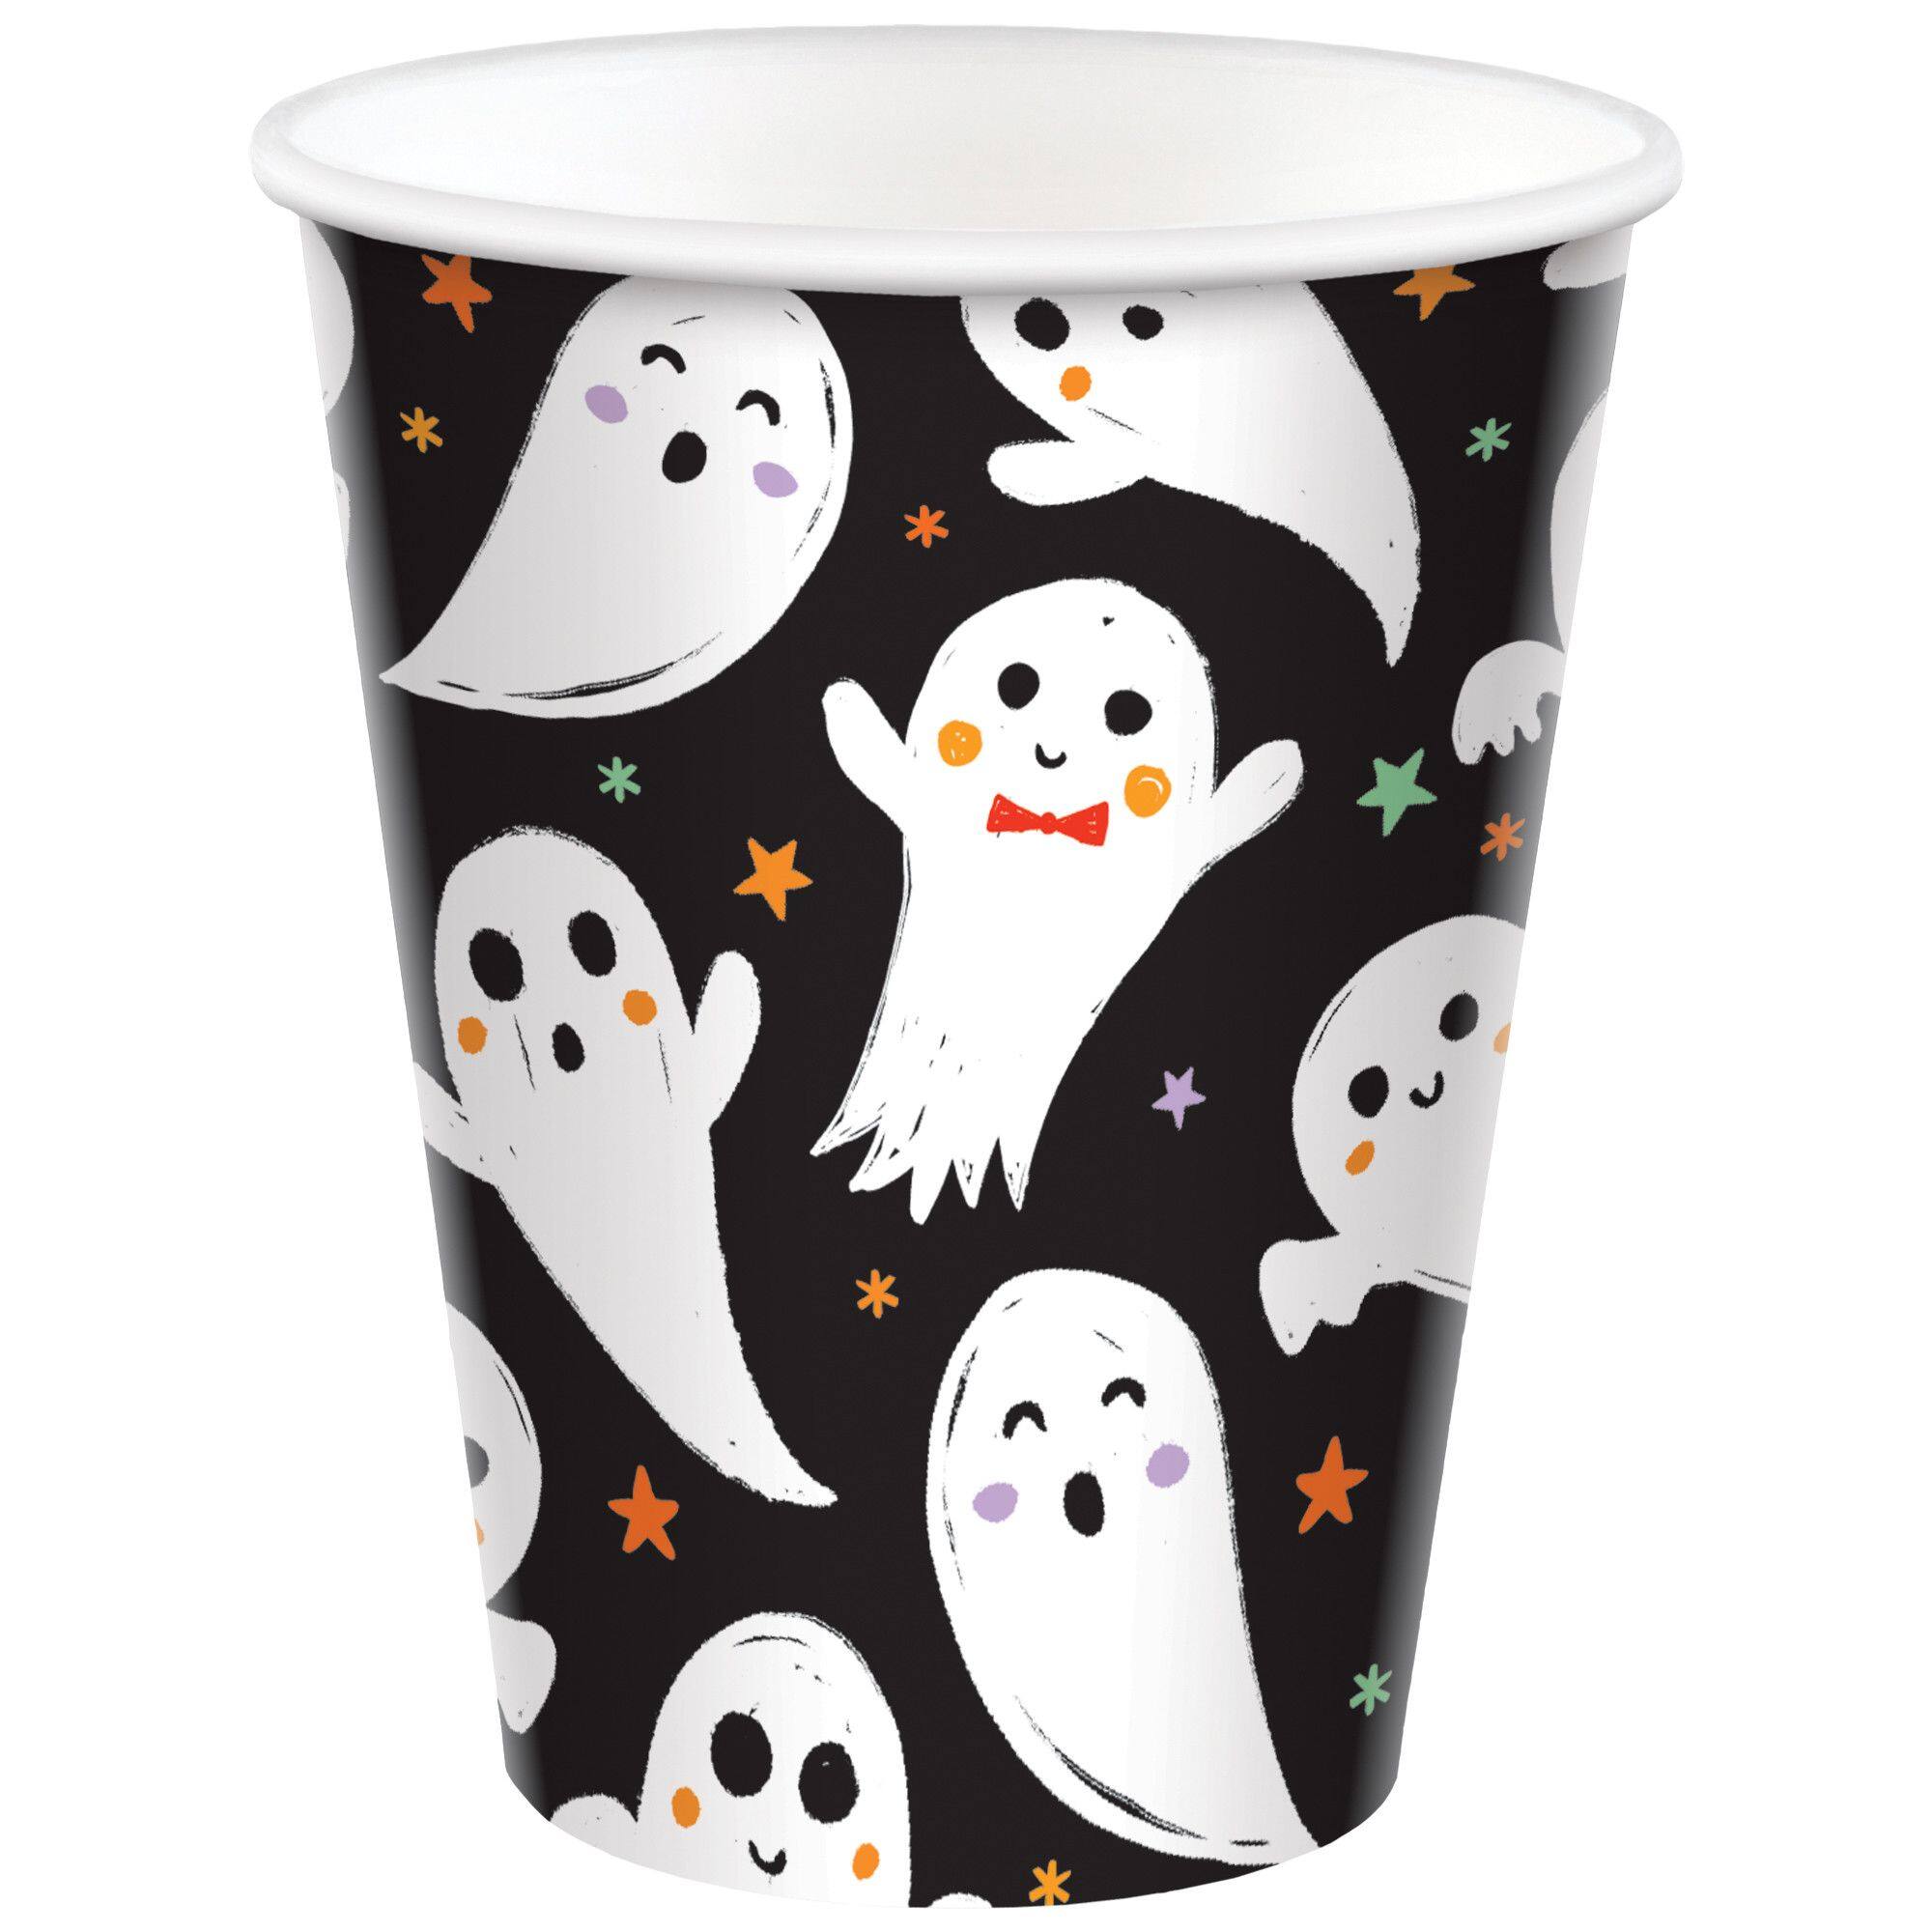 Ghost Face Styrofoam Cups